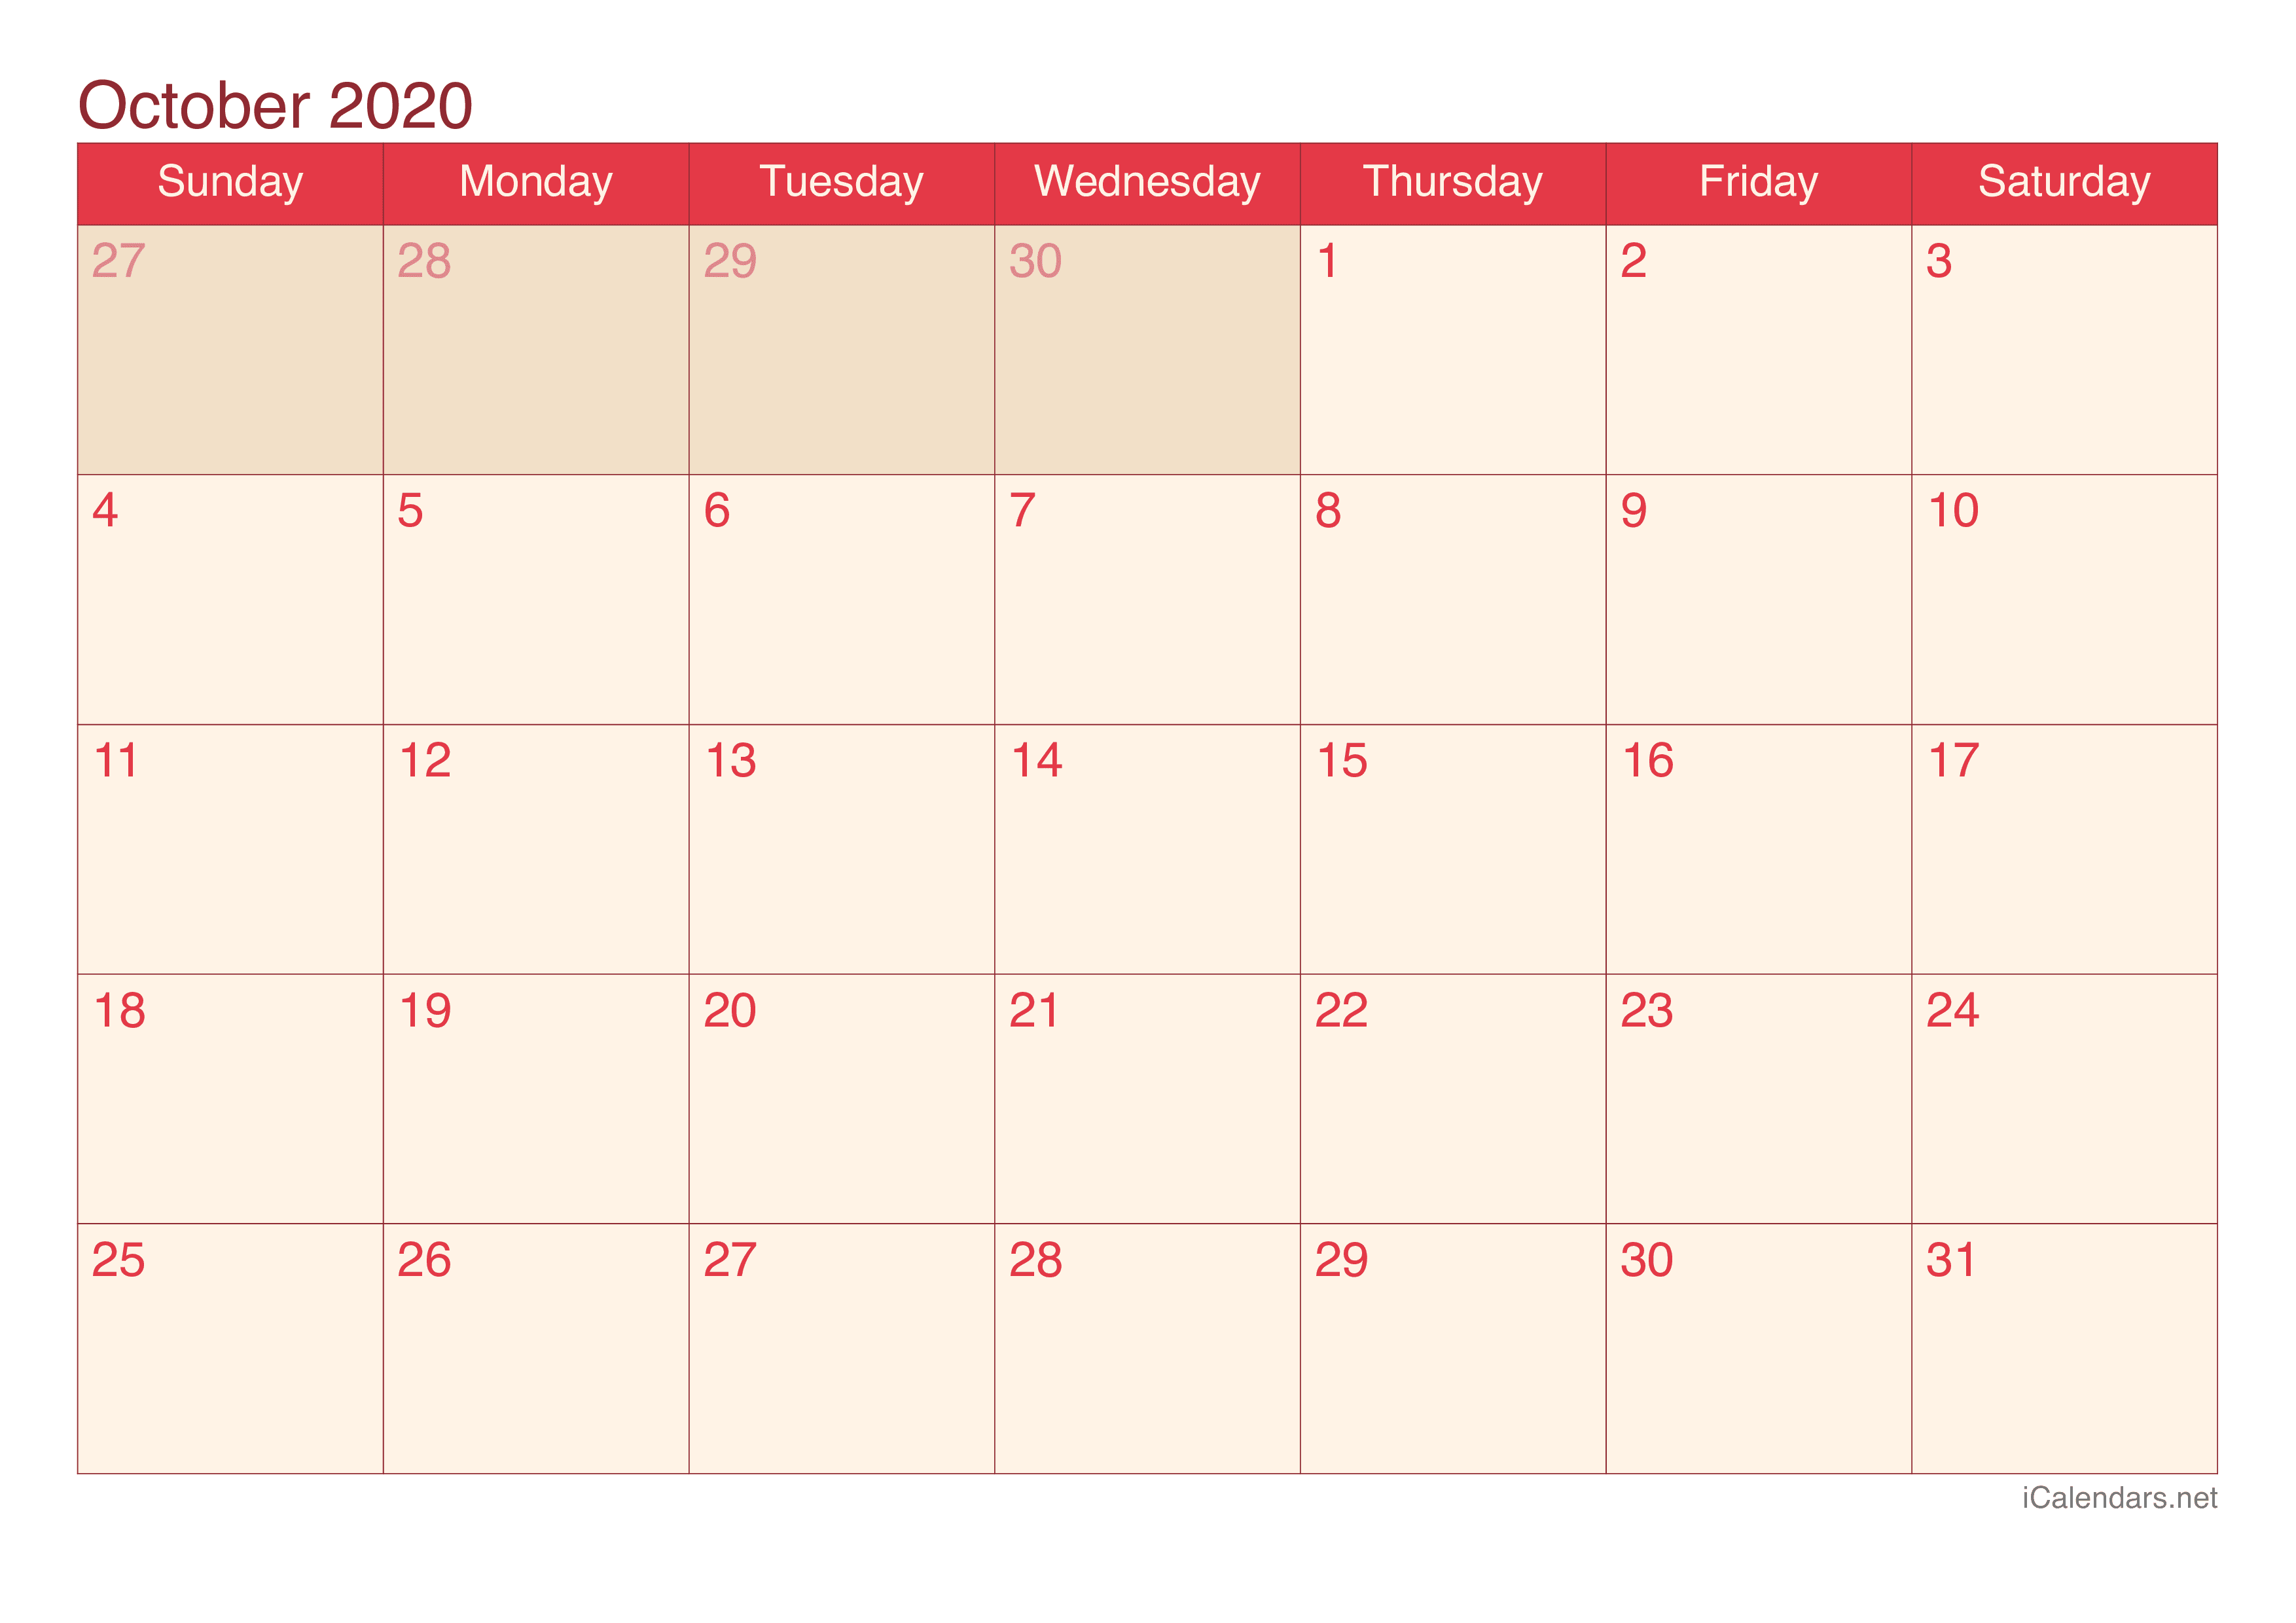 2020 October Calendar - Cherry